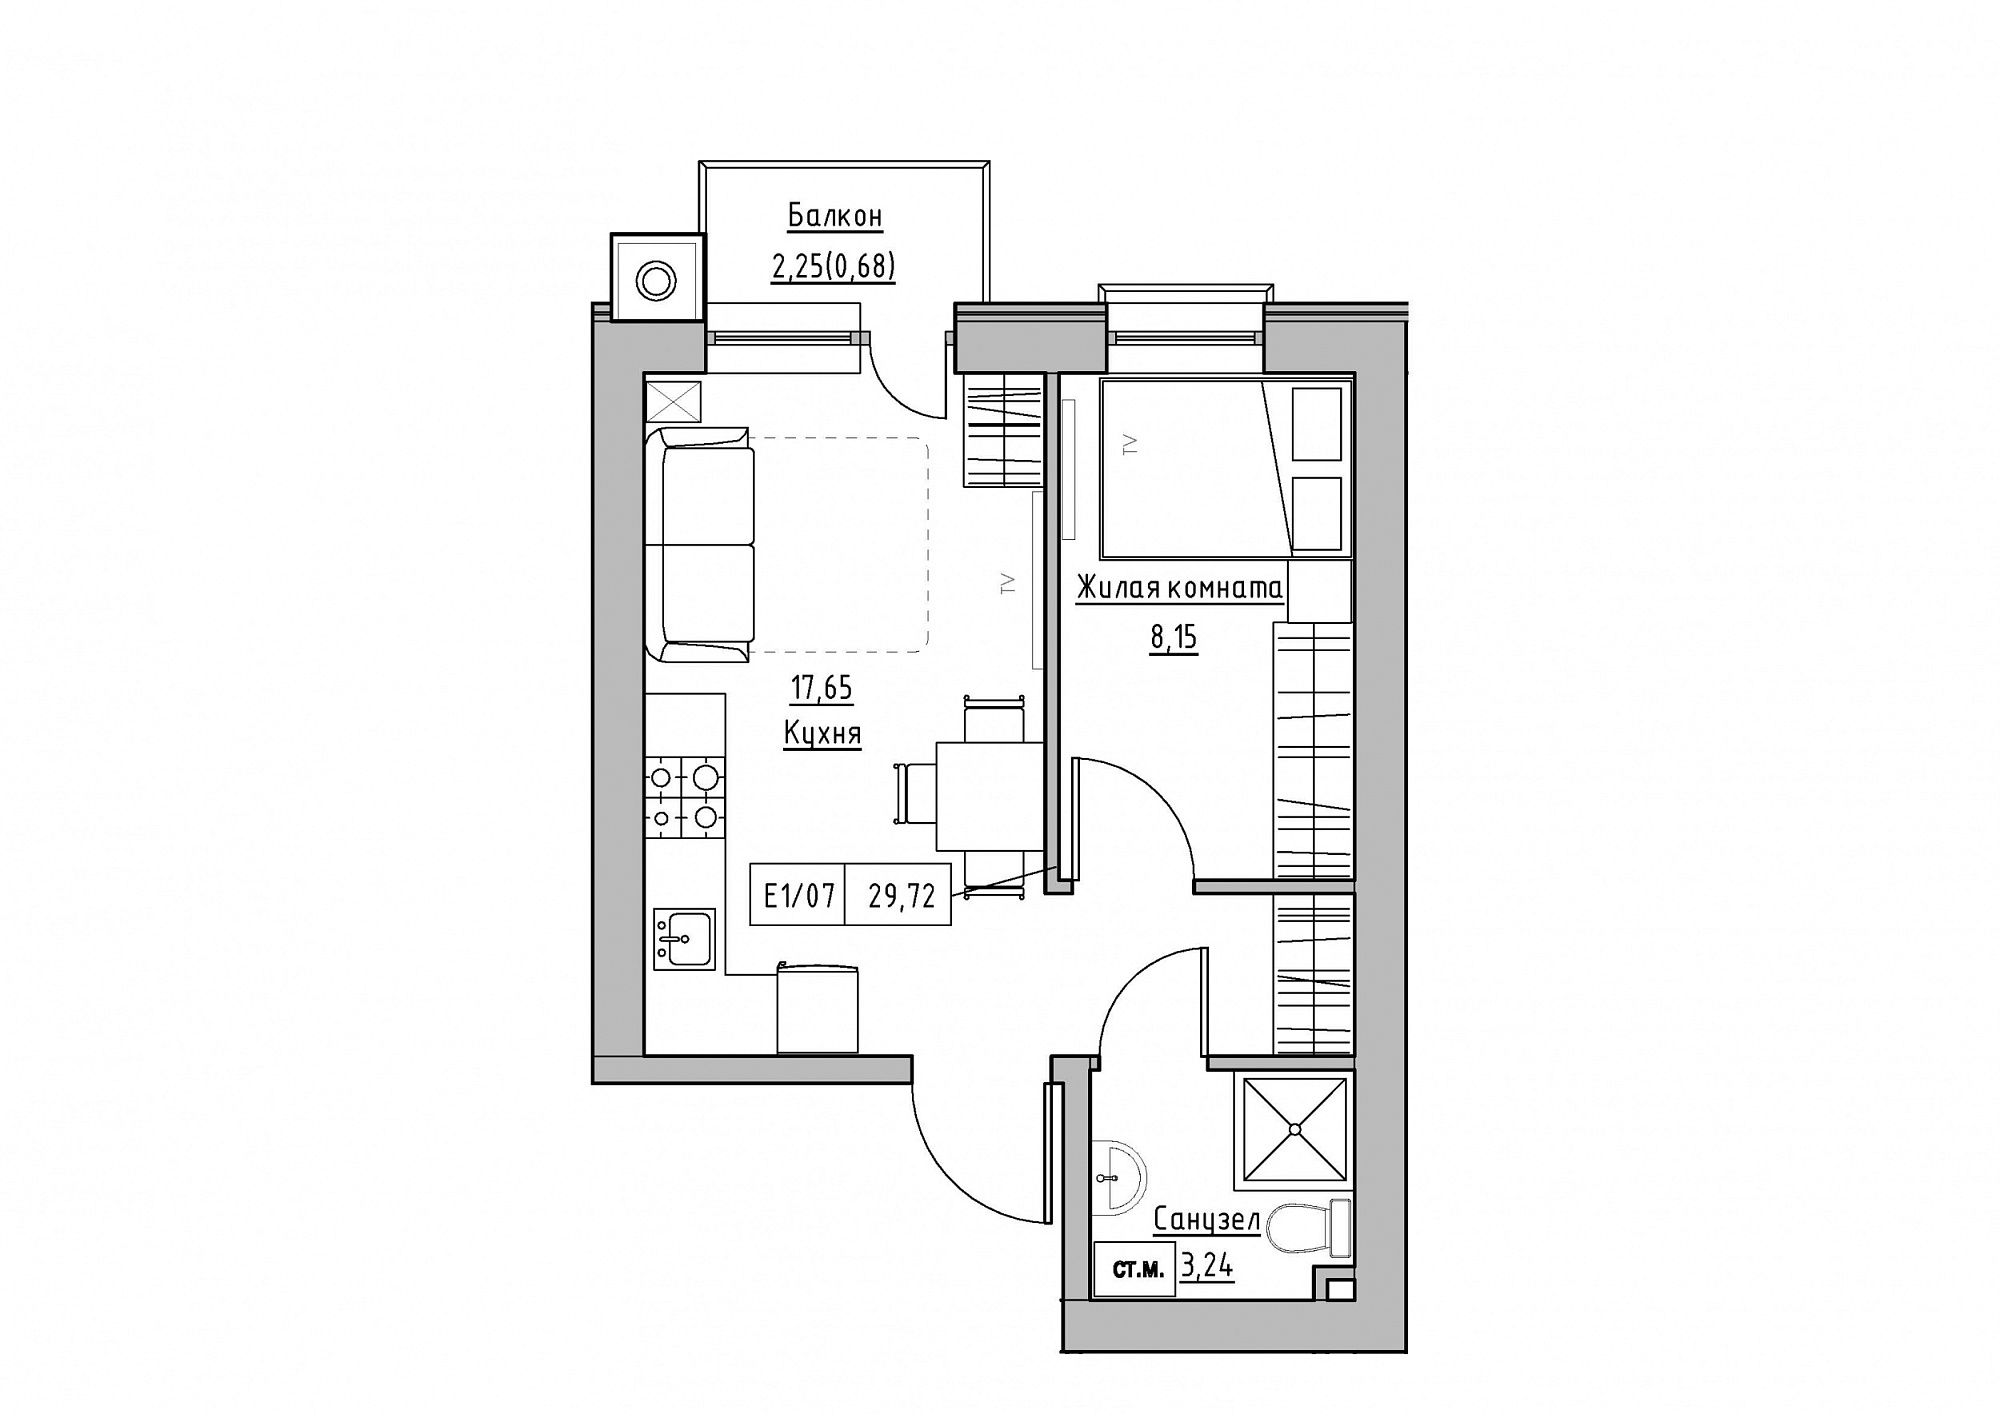 Planning 1-rm flats area 29.72m2, KS-012-04/0003.